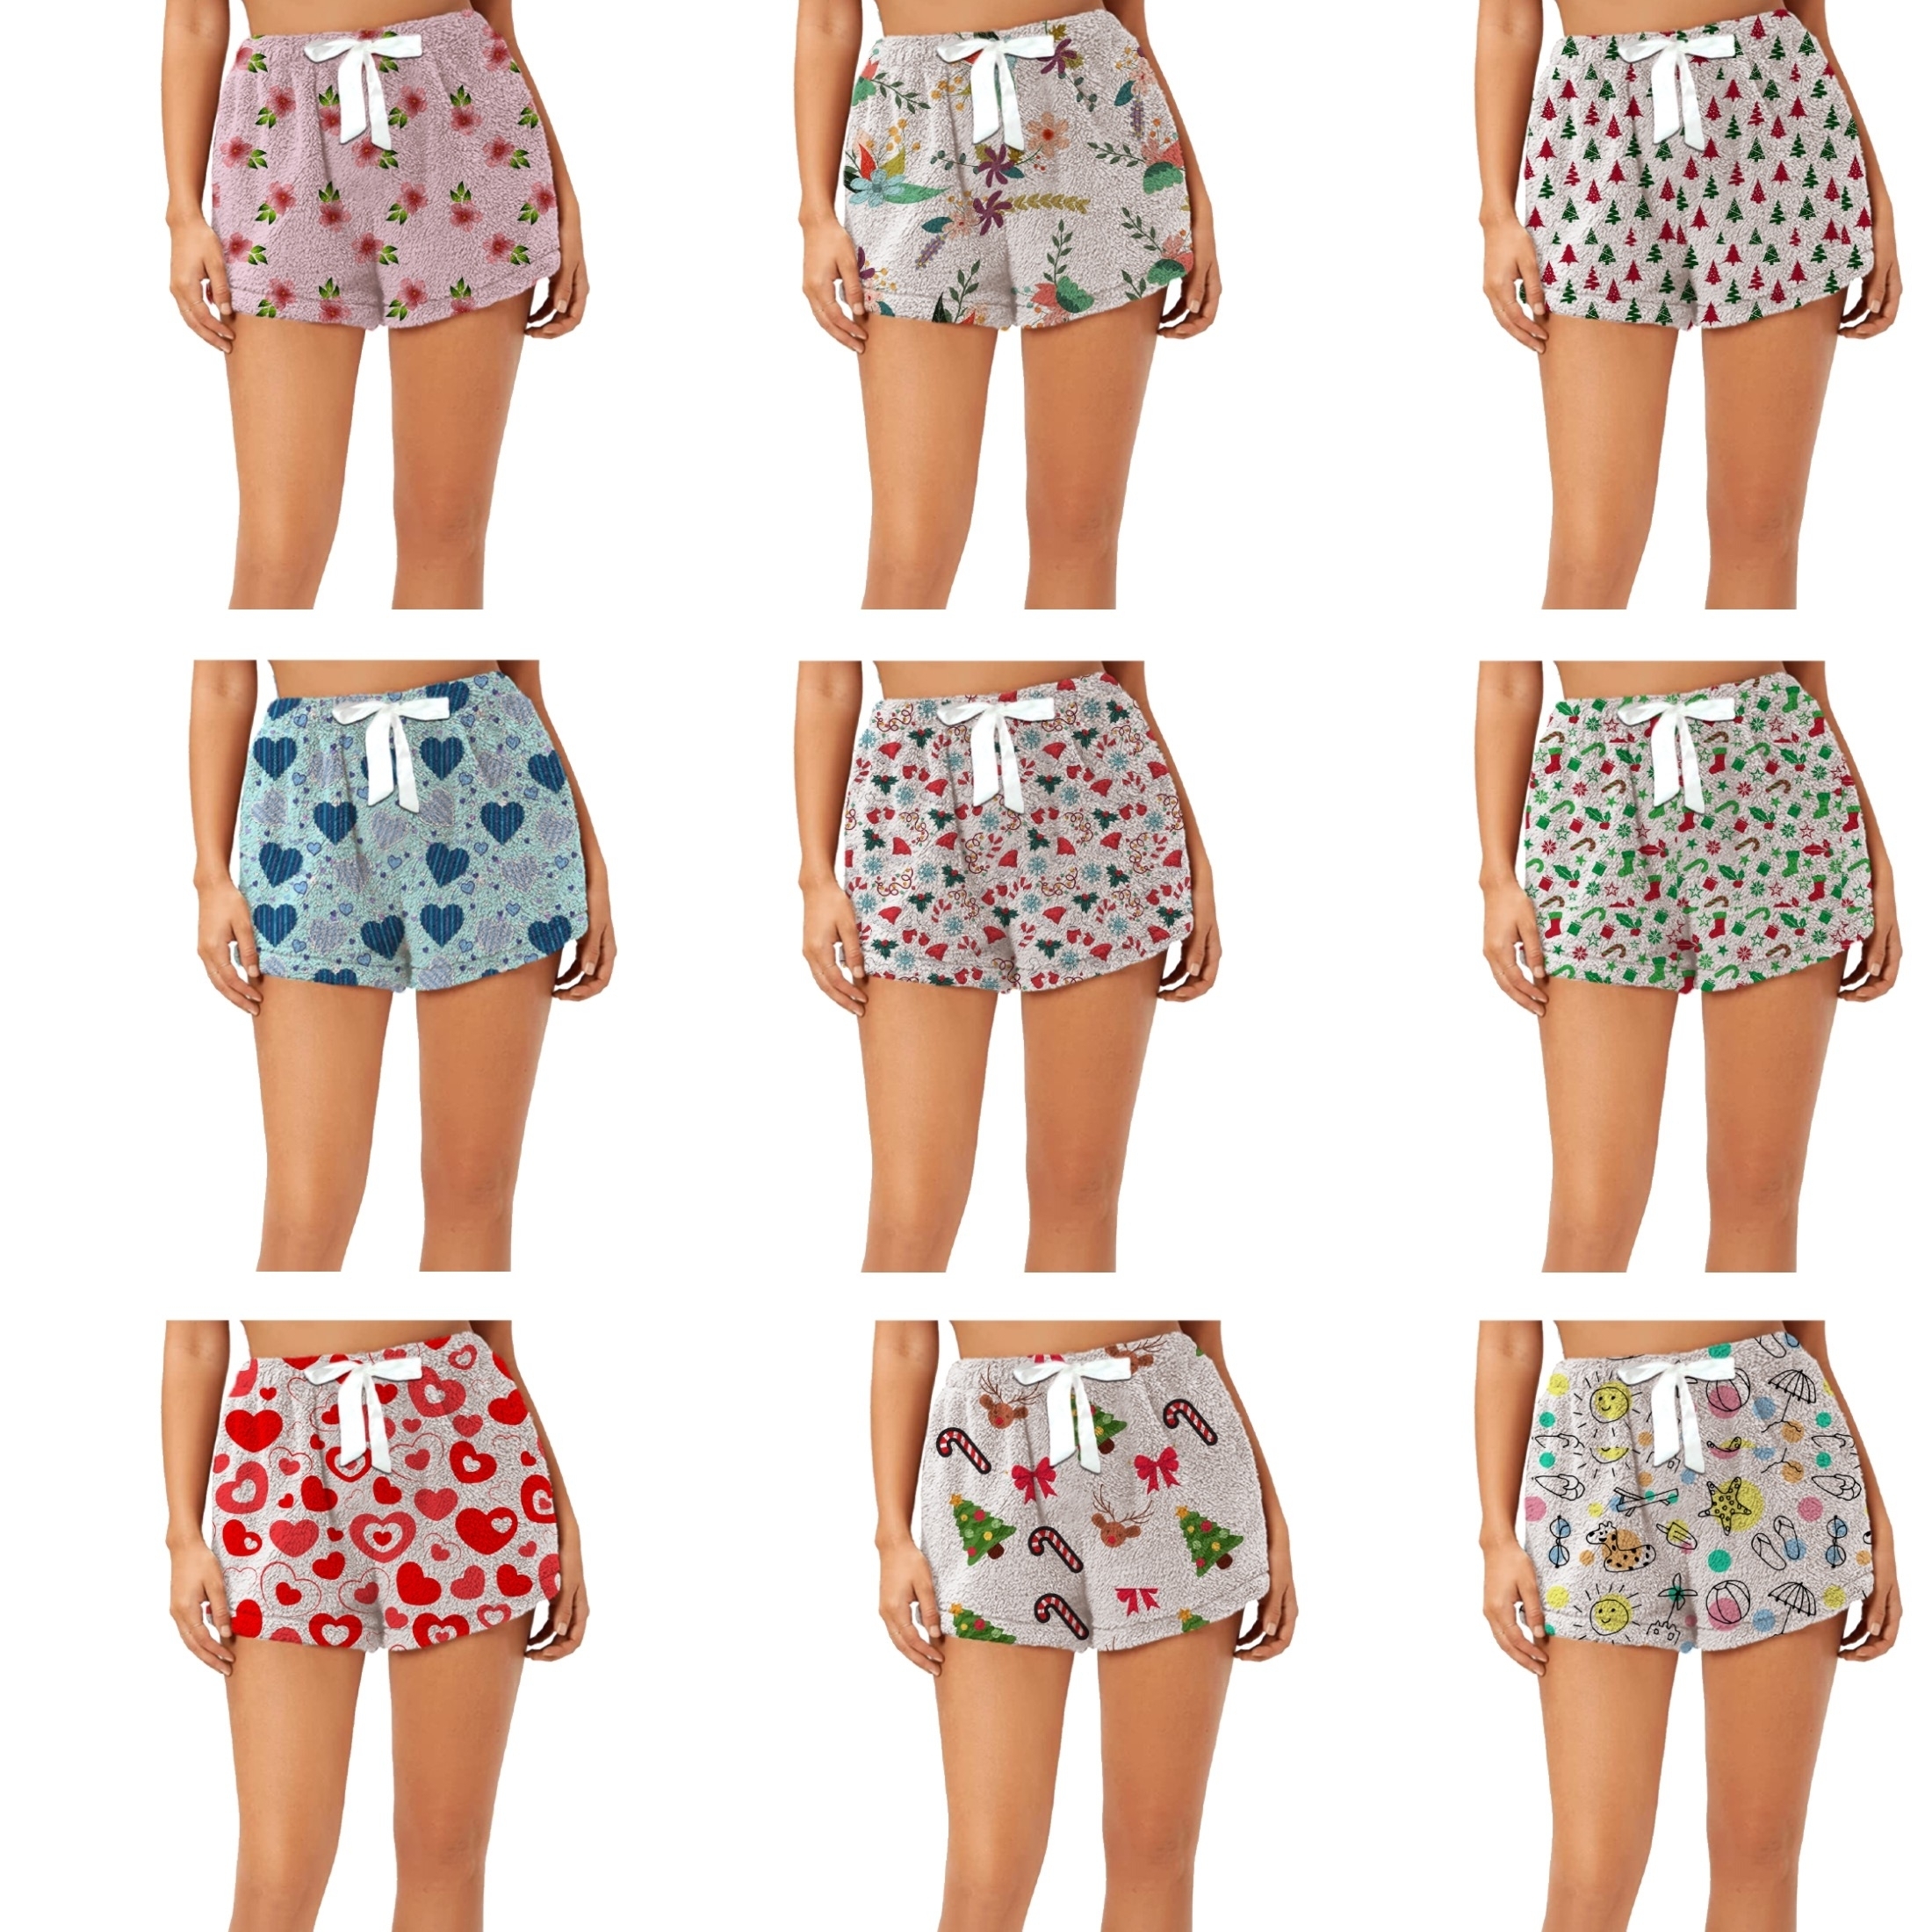 3-Pack: Women's Super Soft Micro Fleece Ultra Plush Printed Pajama Shorts - Small